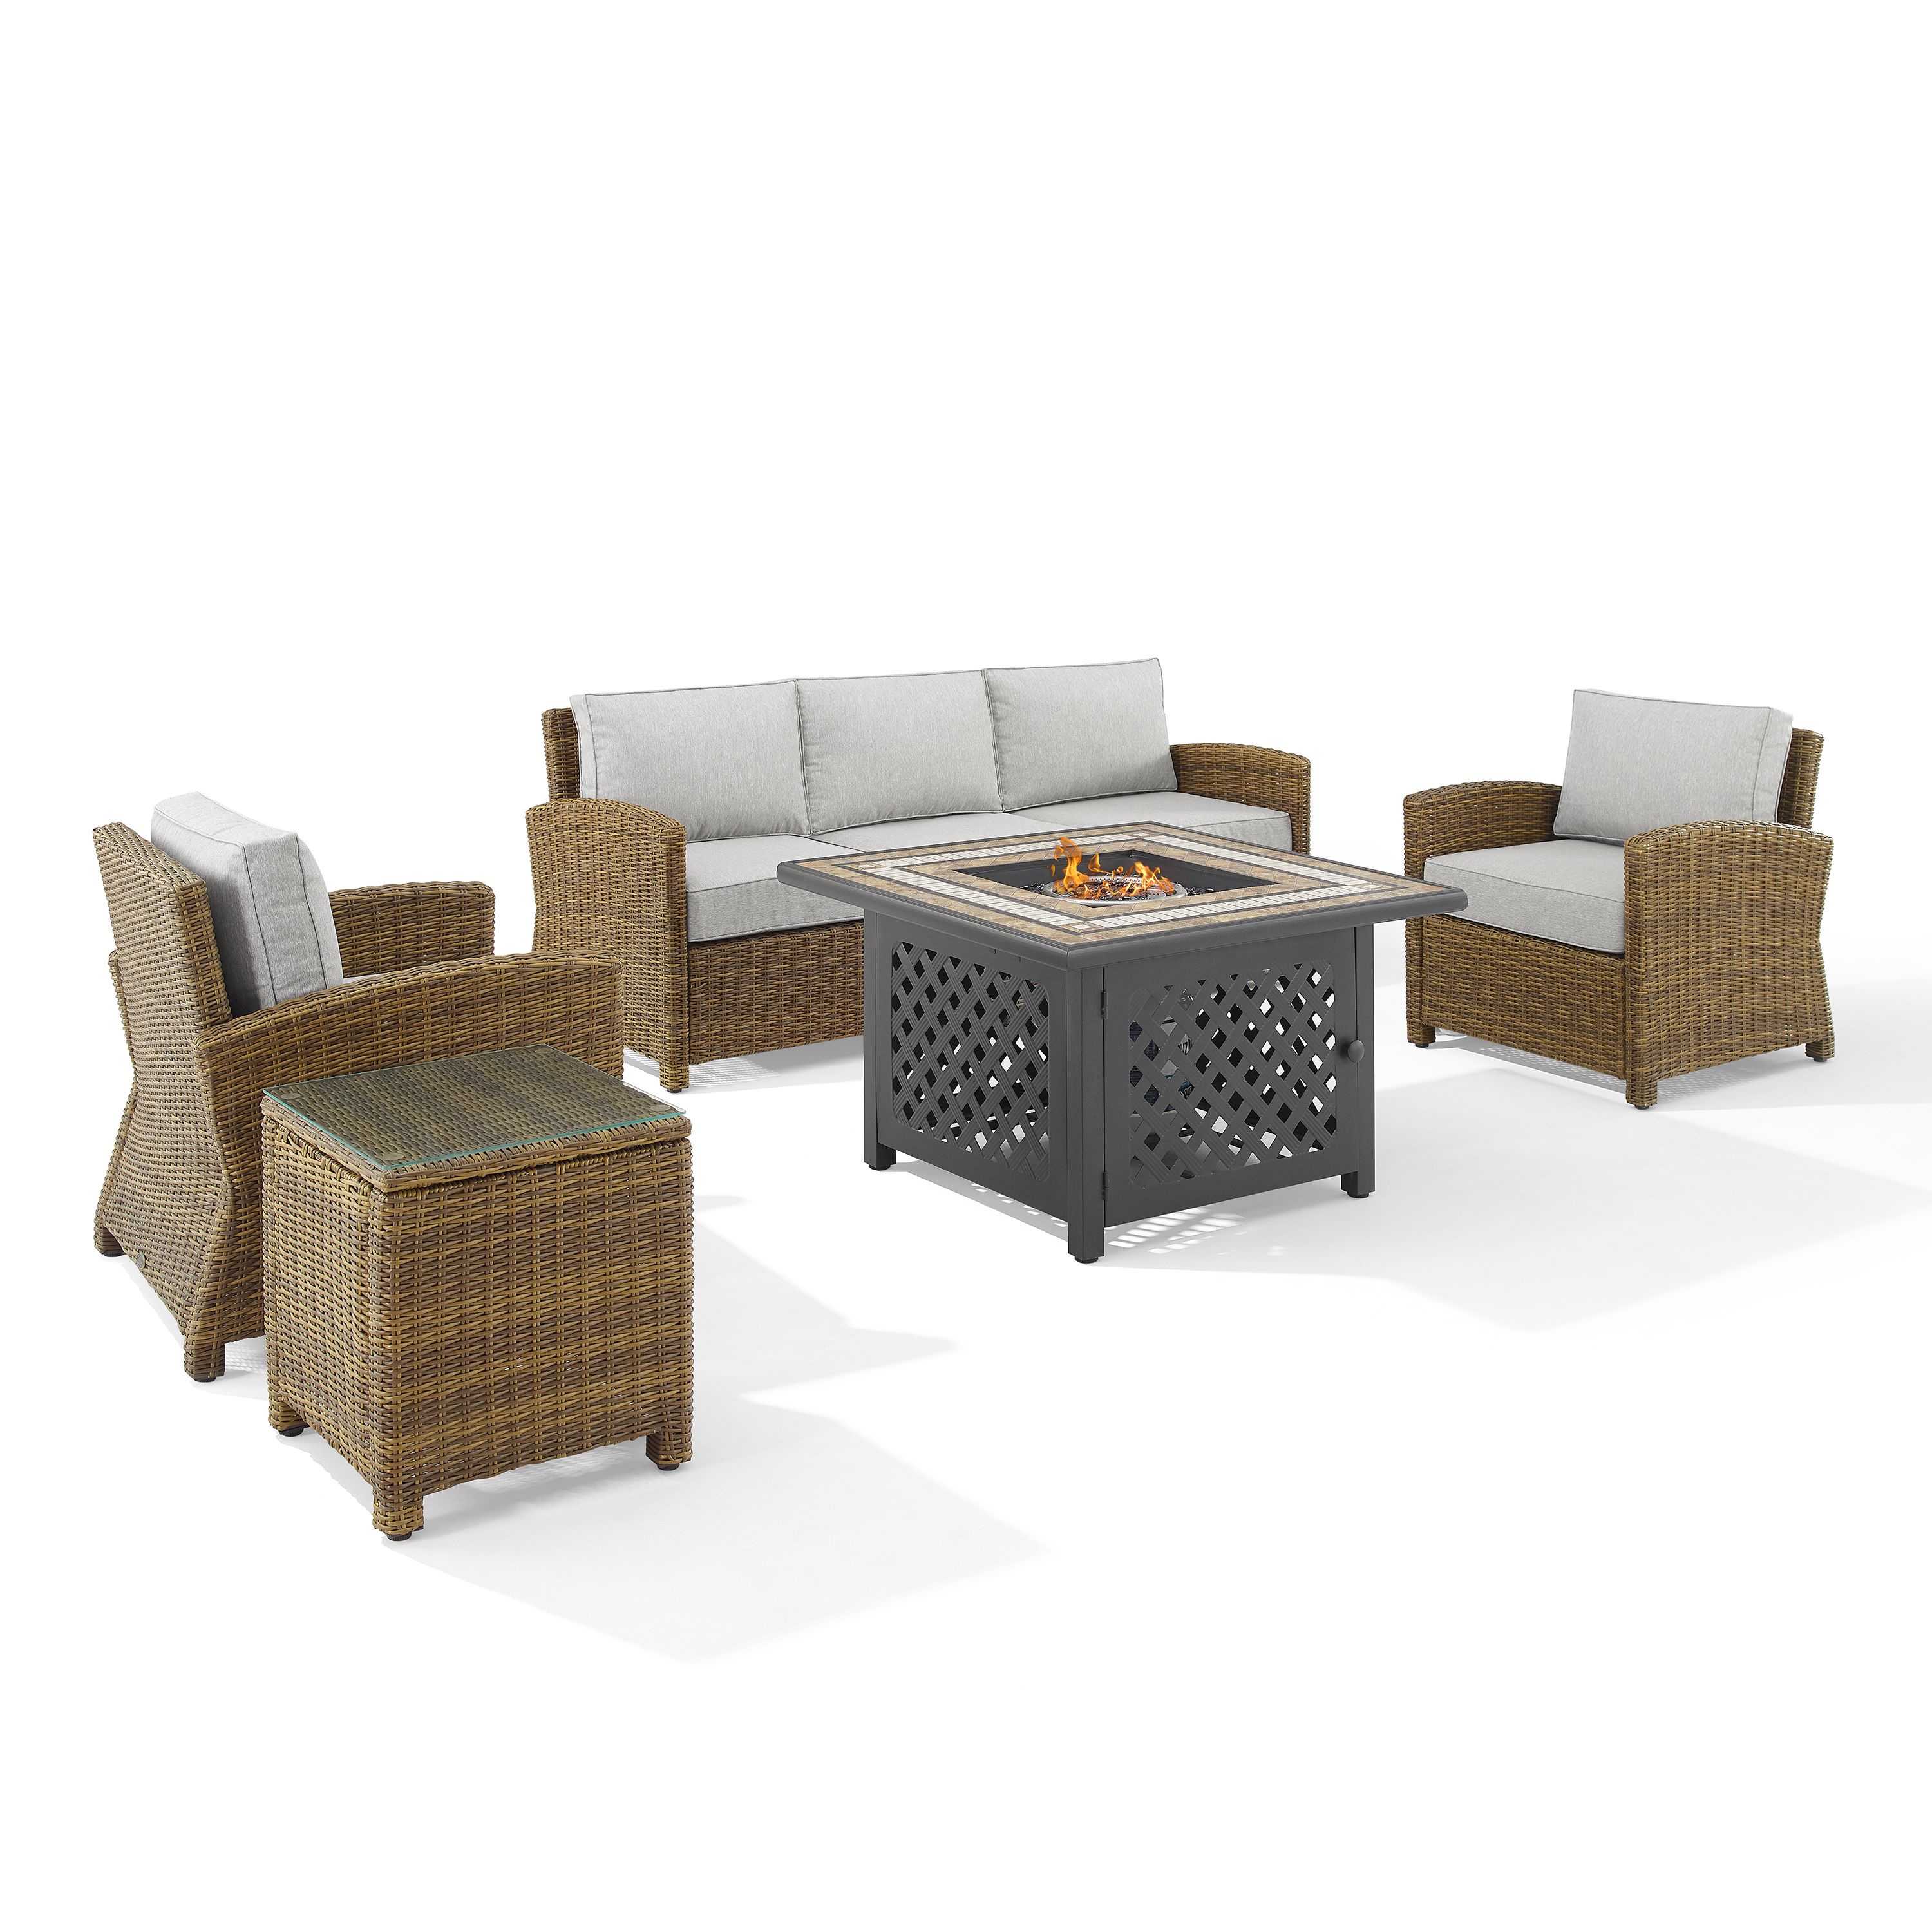 Crosley Furniture Bradenton 5pc Wicker / Rattan Sofa Set & Fire Table in Brown - image 1 of 10